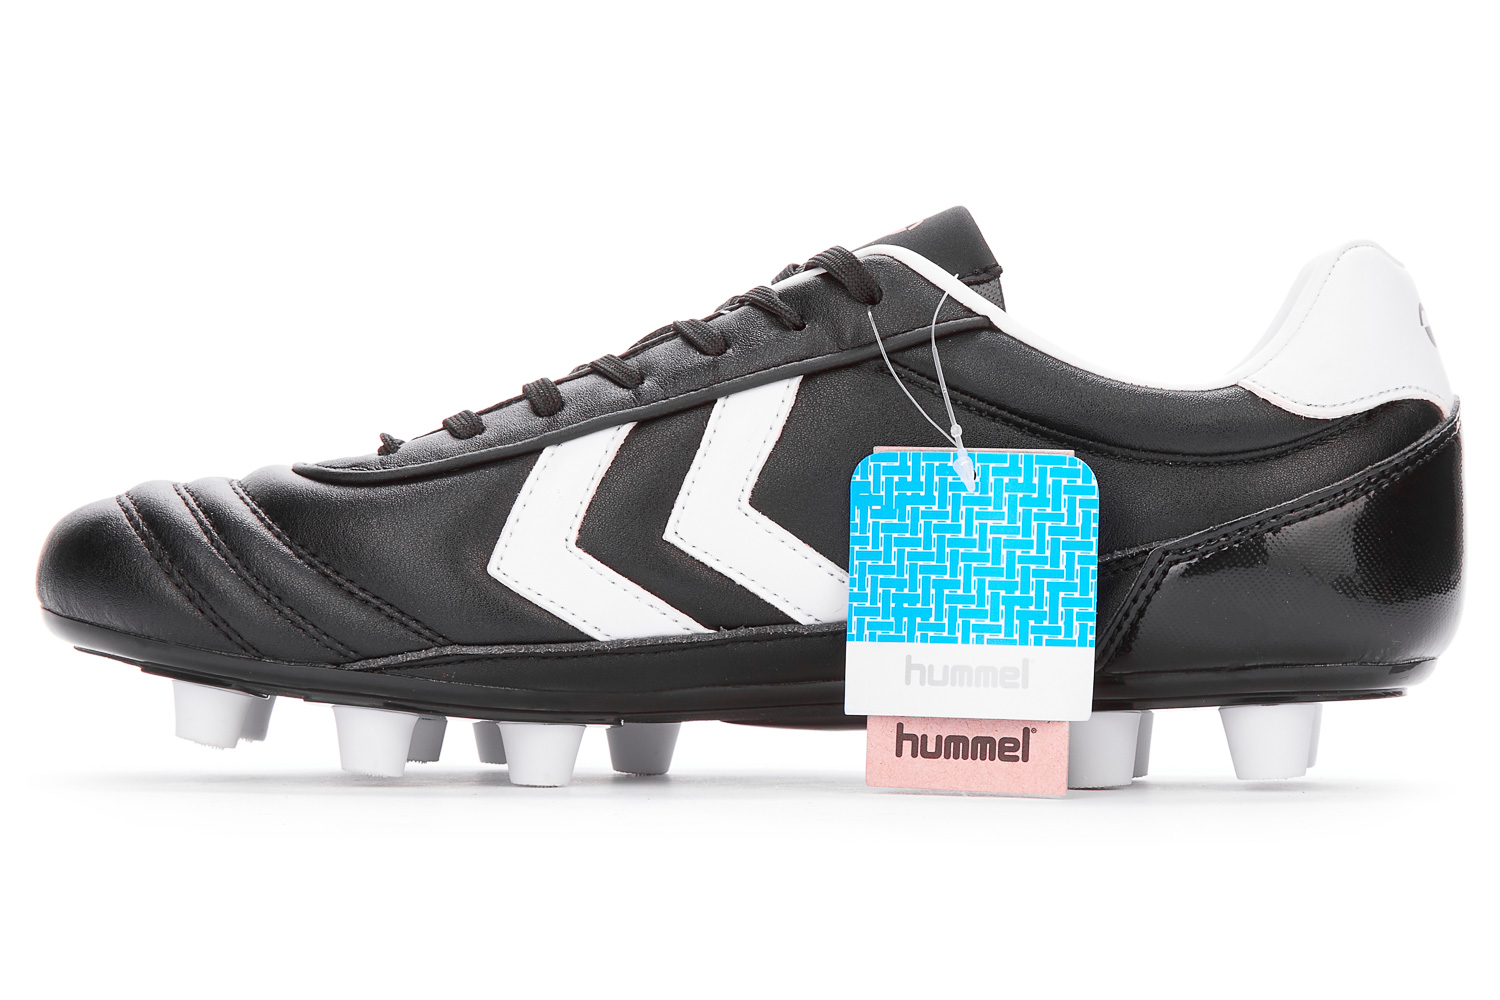 Sinewi Påstand frokost 2017 Hummel Old School Star Football Boots *In Box* FG